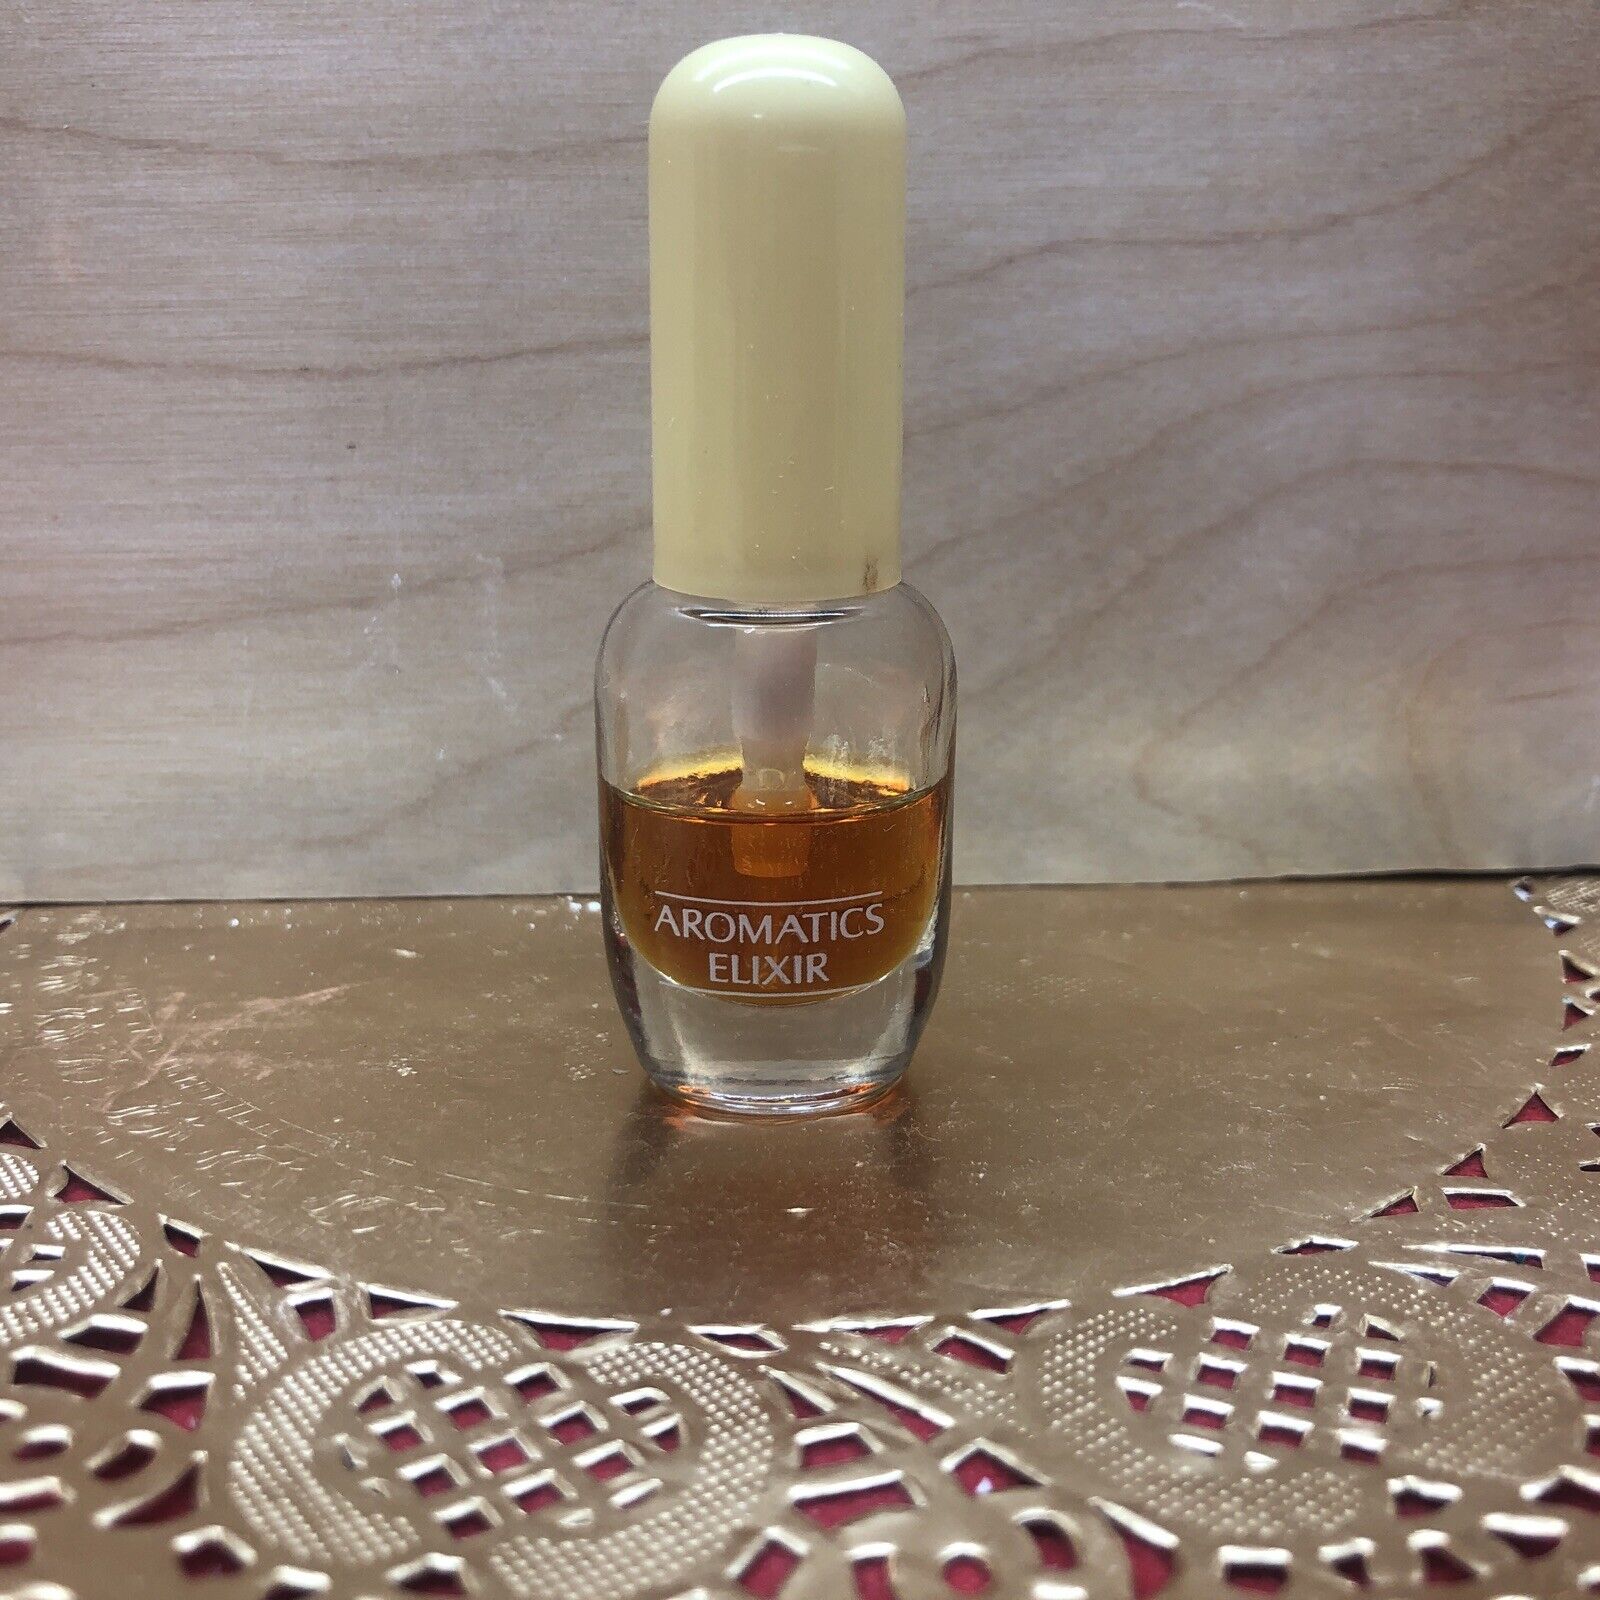 Clinique Aromatics Elixir .14 oz / 4 ml Travel Perfume Spray 50%